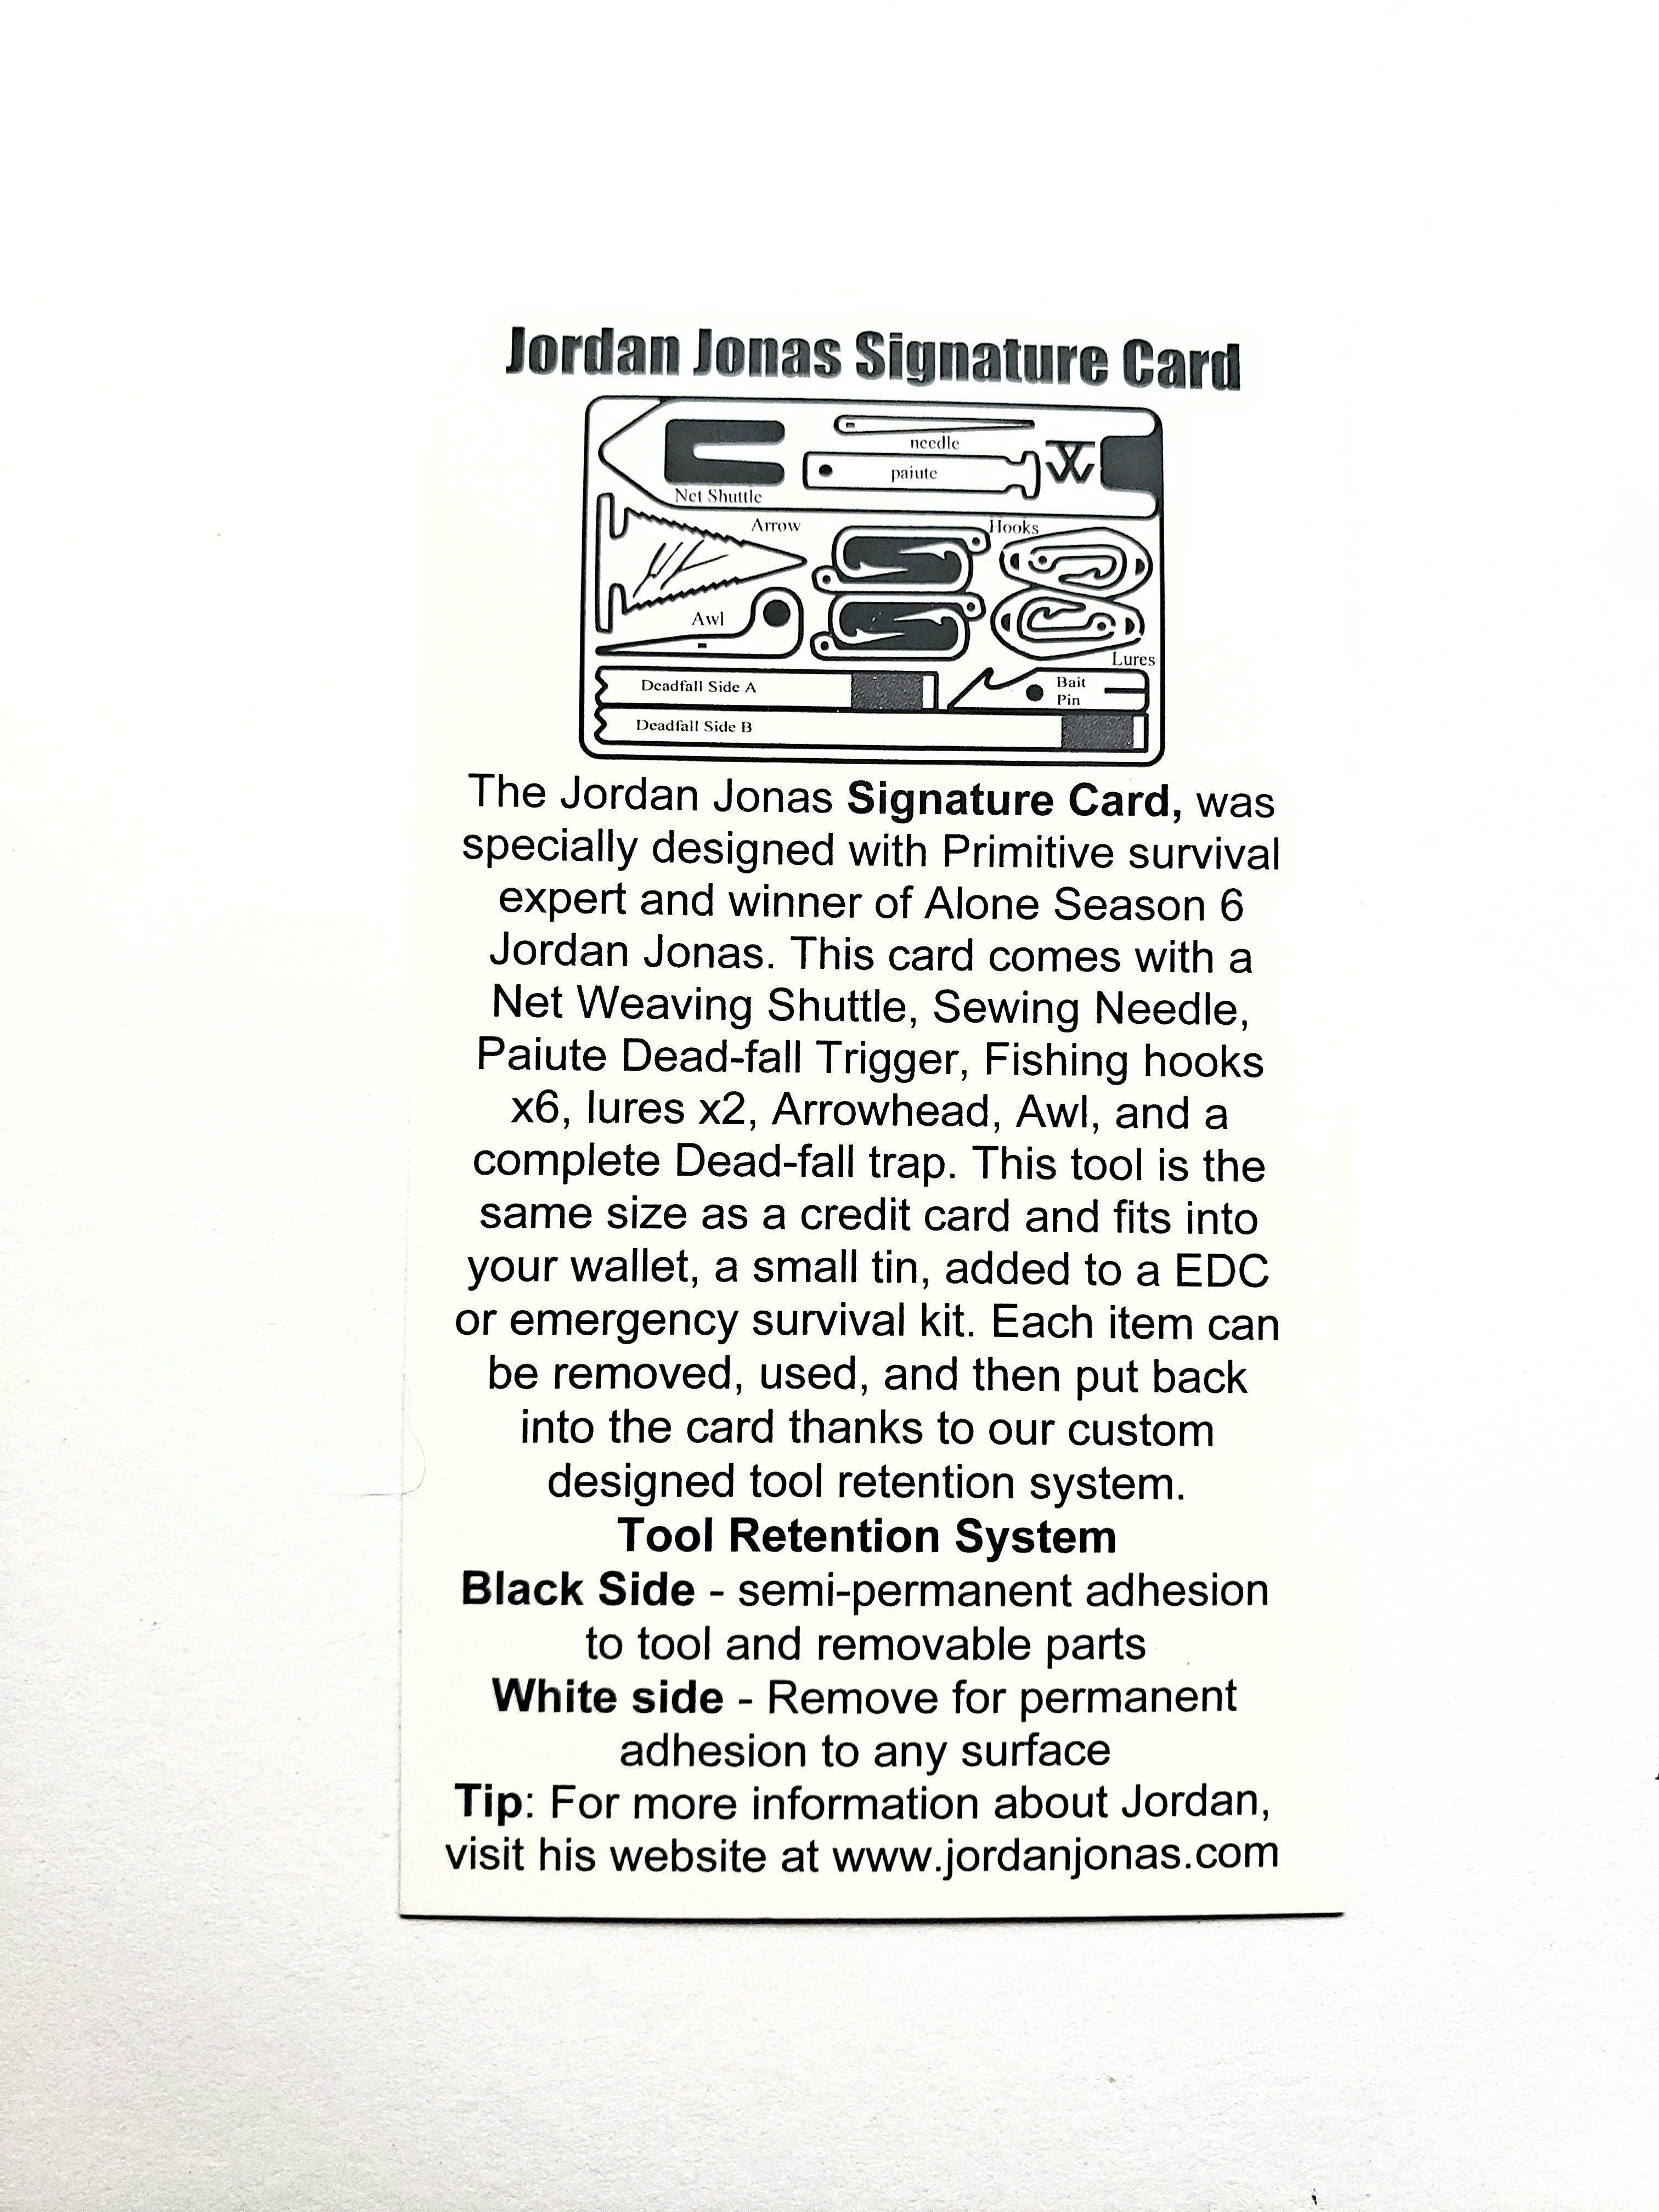 Jordan Jonas Signature Survival Card-Grimworkshop-bugoutbag-bushcraft-edc-gear-edctool-everydaycarry-survivalcard-survivalkit-wilderness-prepping-toolkit